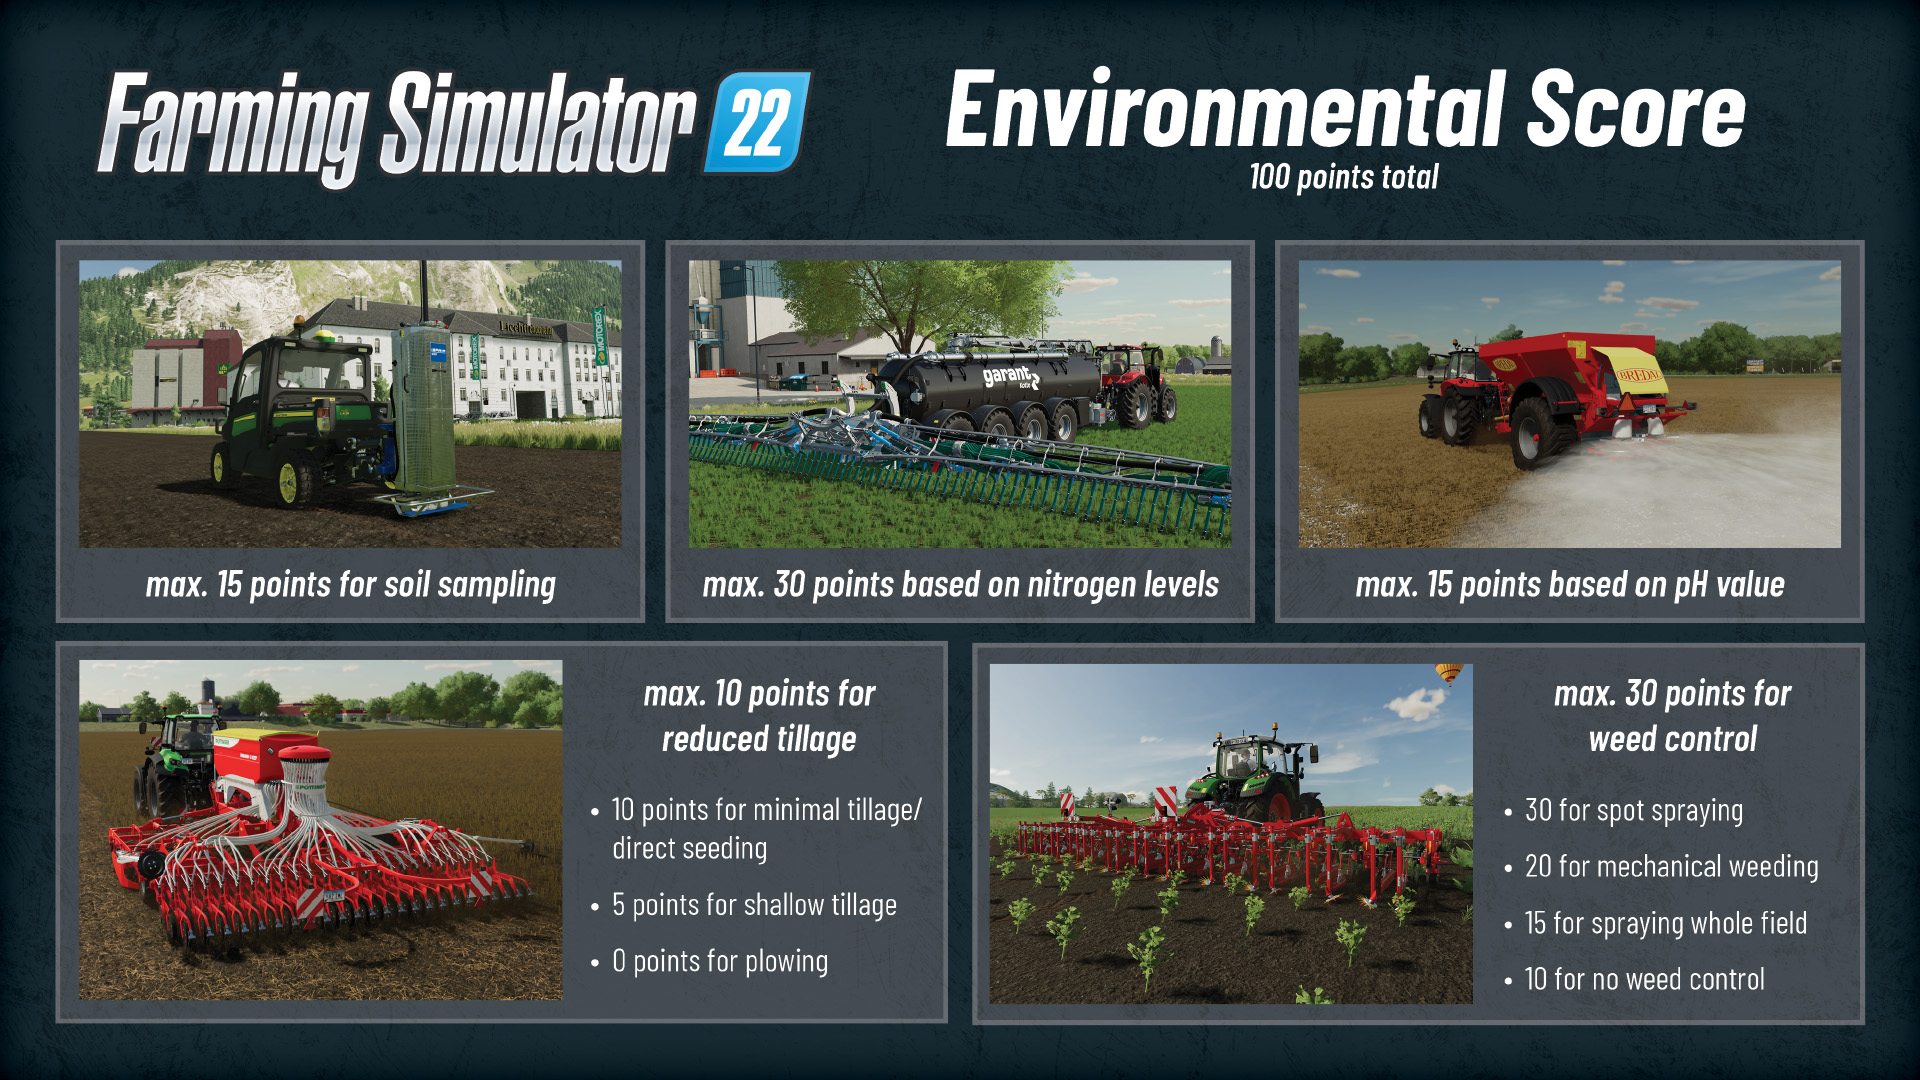 You missed a spot, Farming Simulator 22